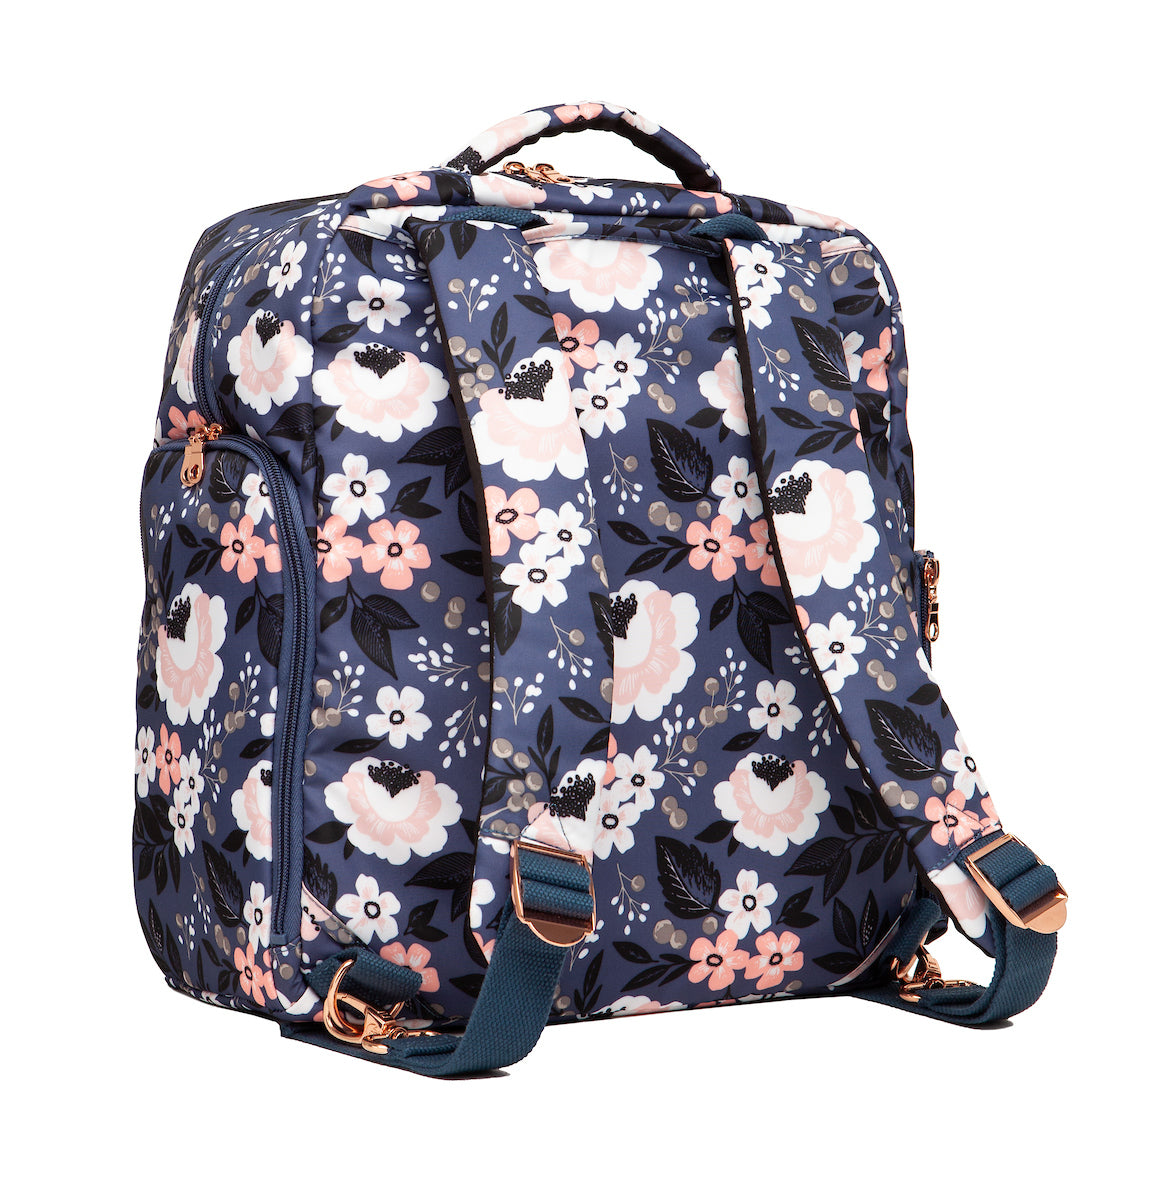 MultiSac Floral Backpack - Women's - $27 - From Breann